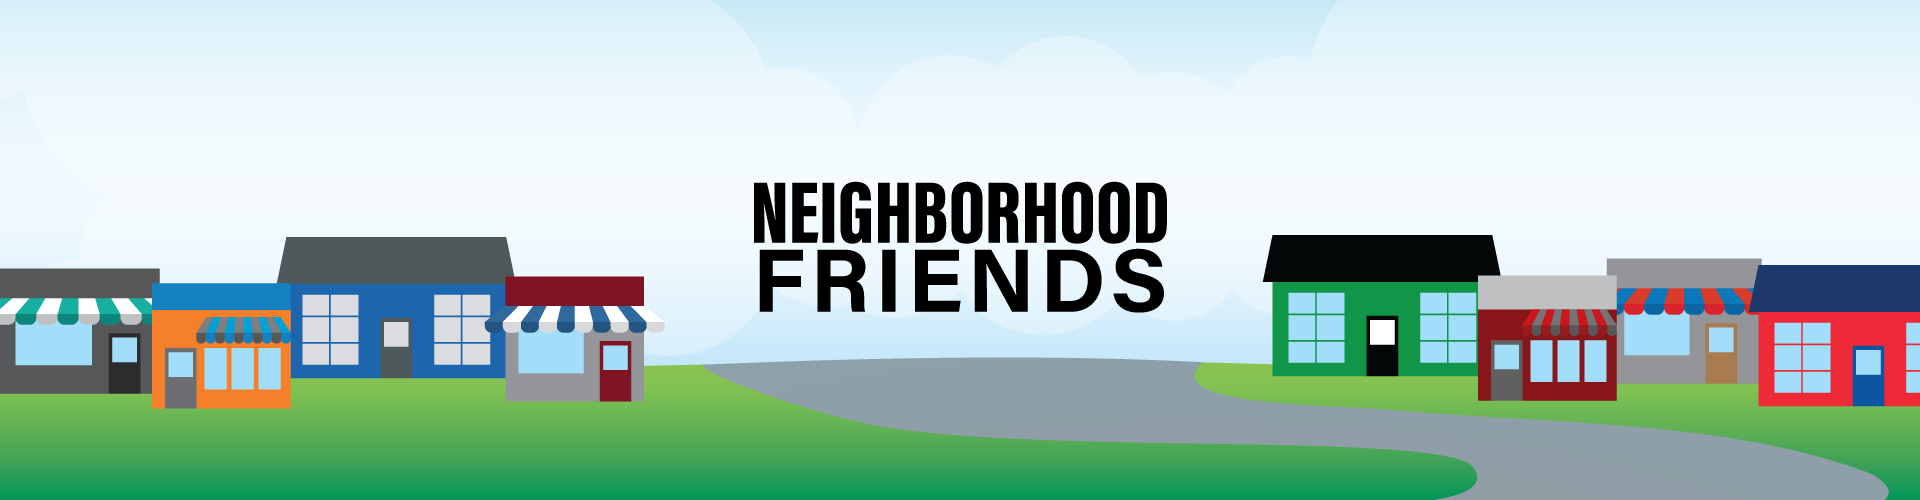 Neighborhood Friends